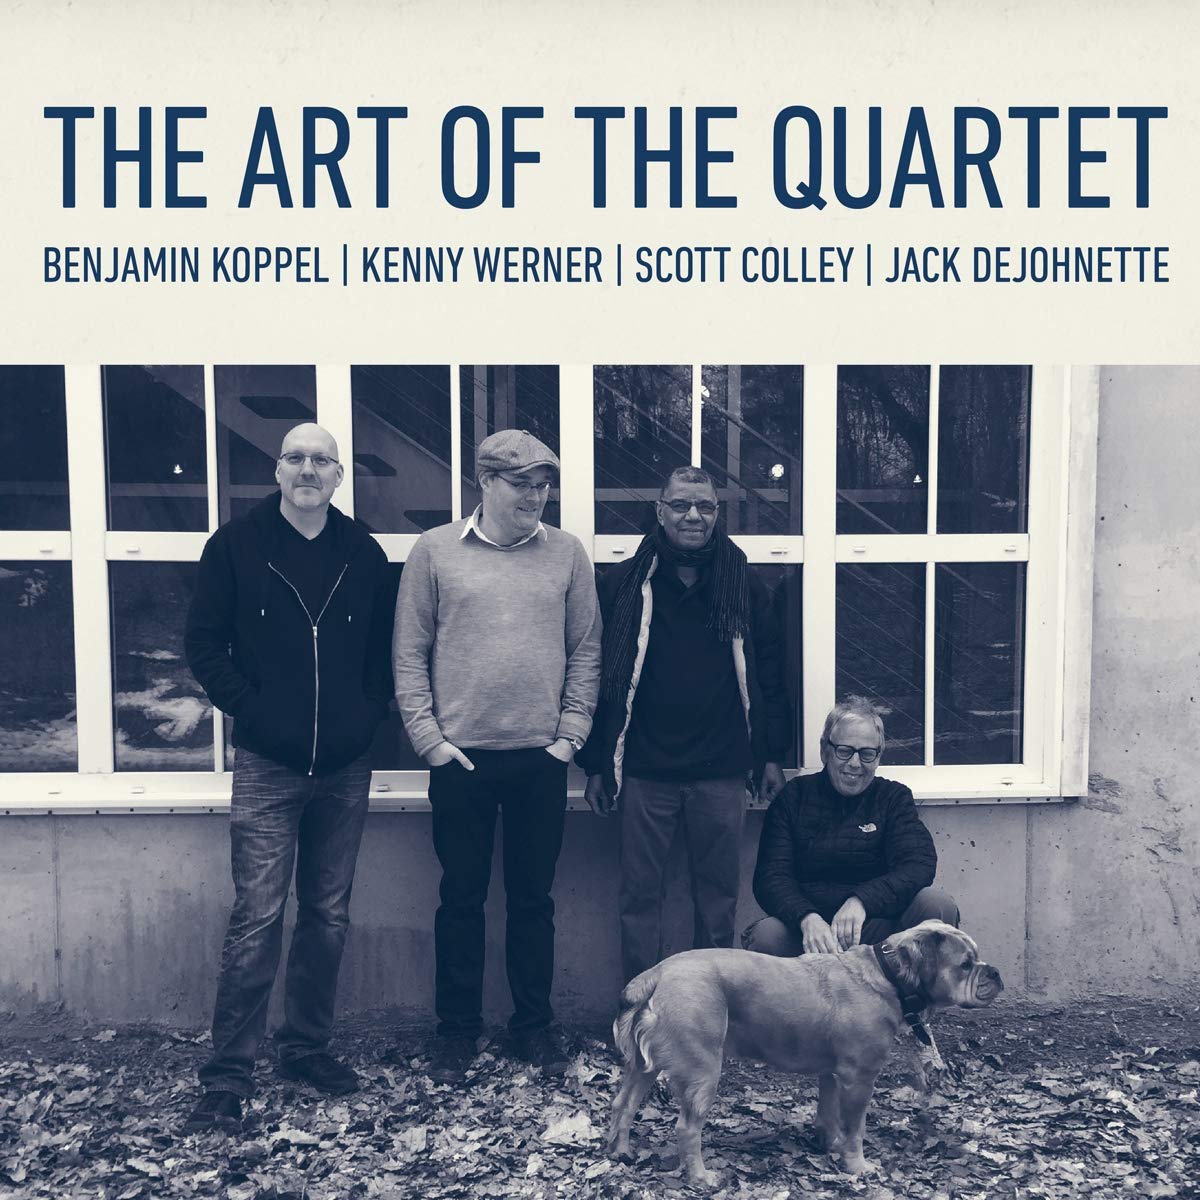 BENJAMIN KOPPEL - The Art of the Quartet cover 